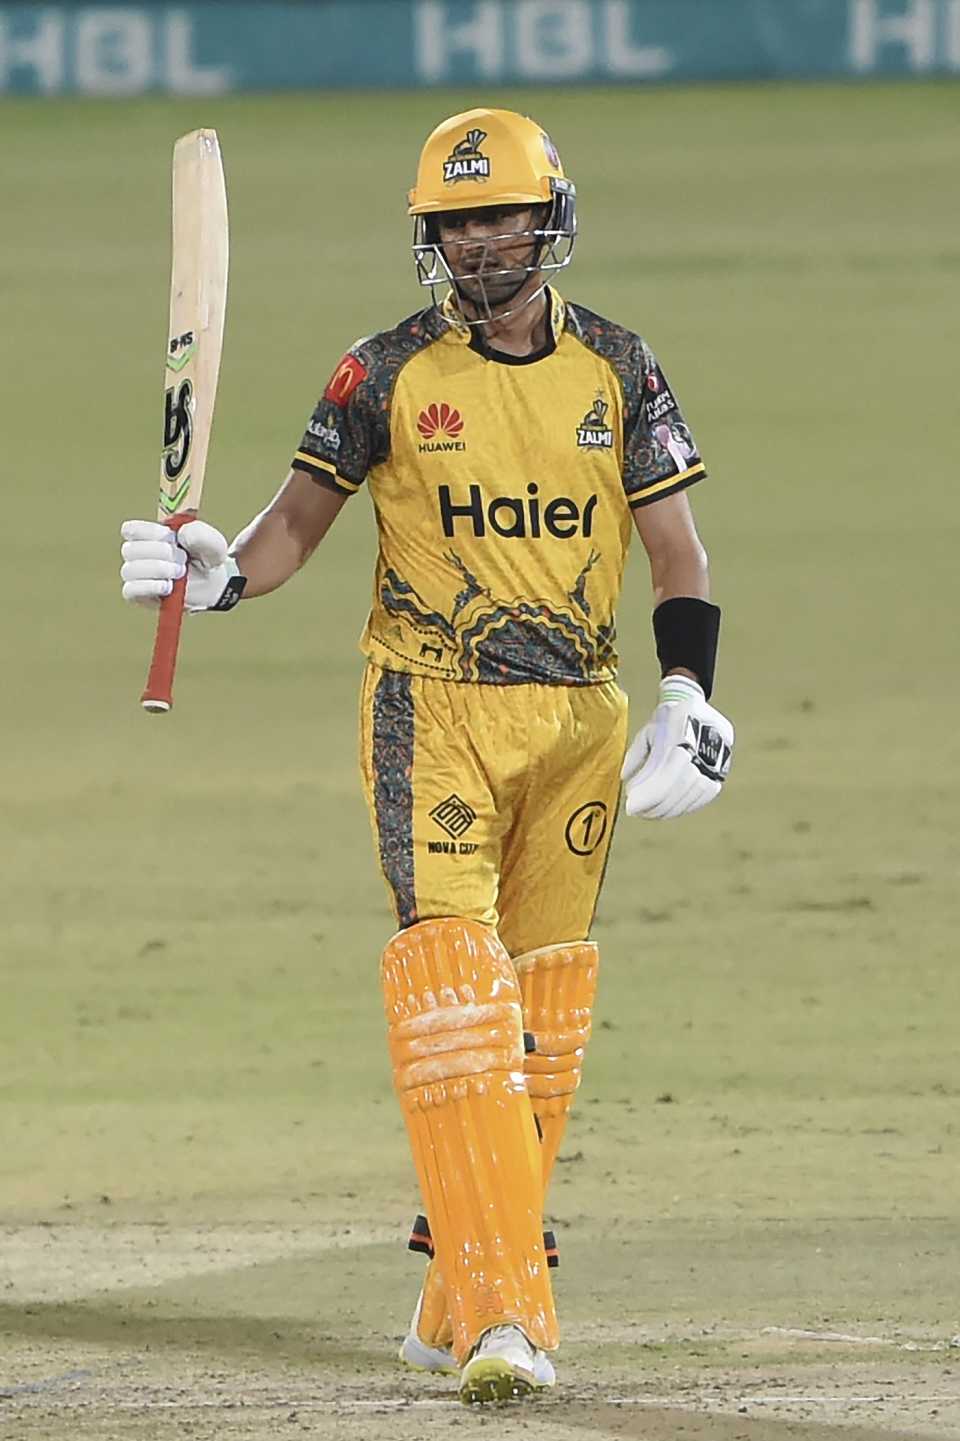 Shoaib Malik raises his bat after getting to a fifty, Peshawar Zalmi vs Karachi Kings, PSL 2022, Karachi, February 4, 2022